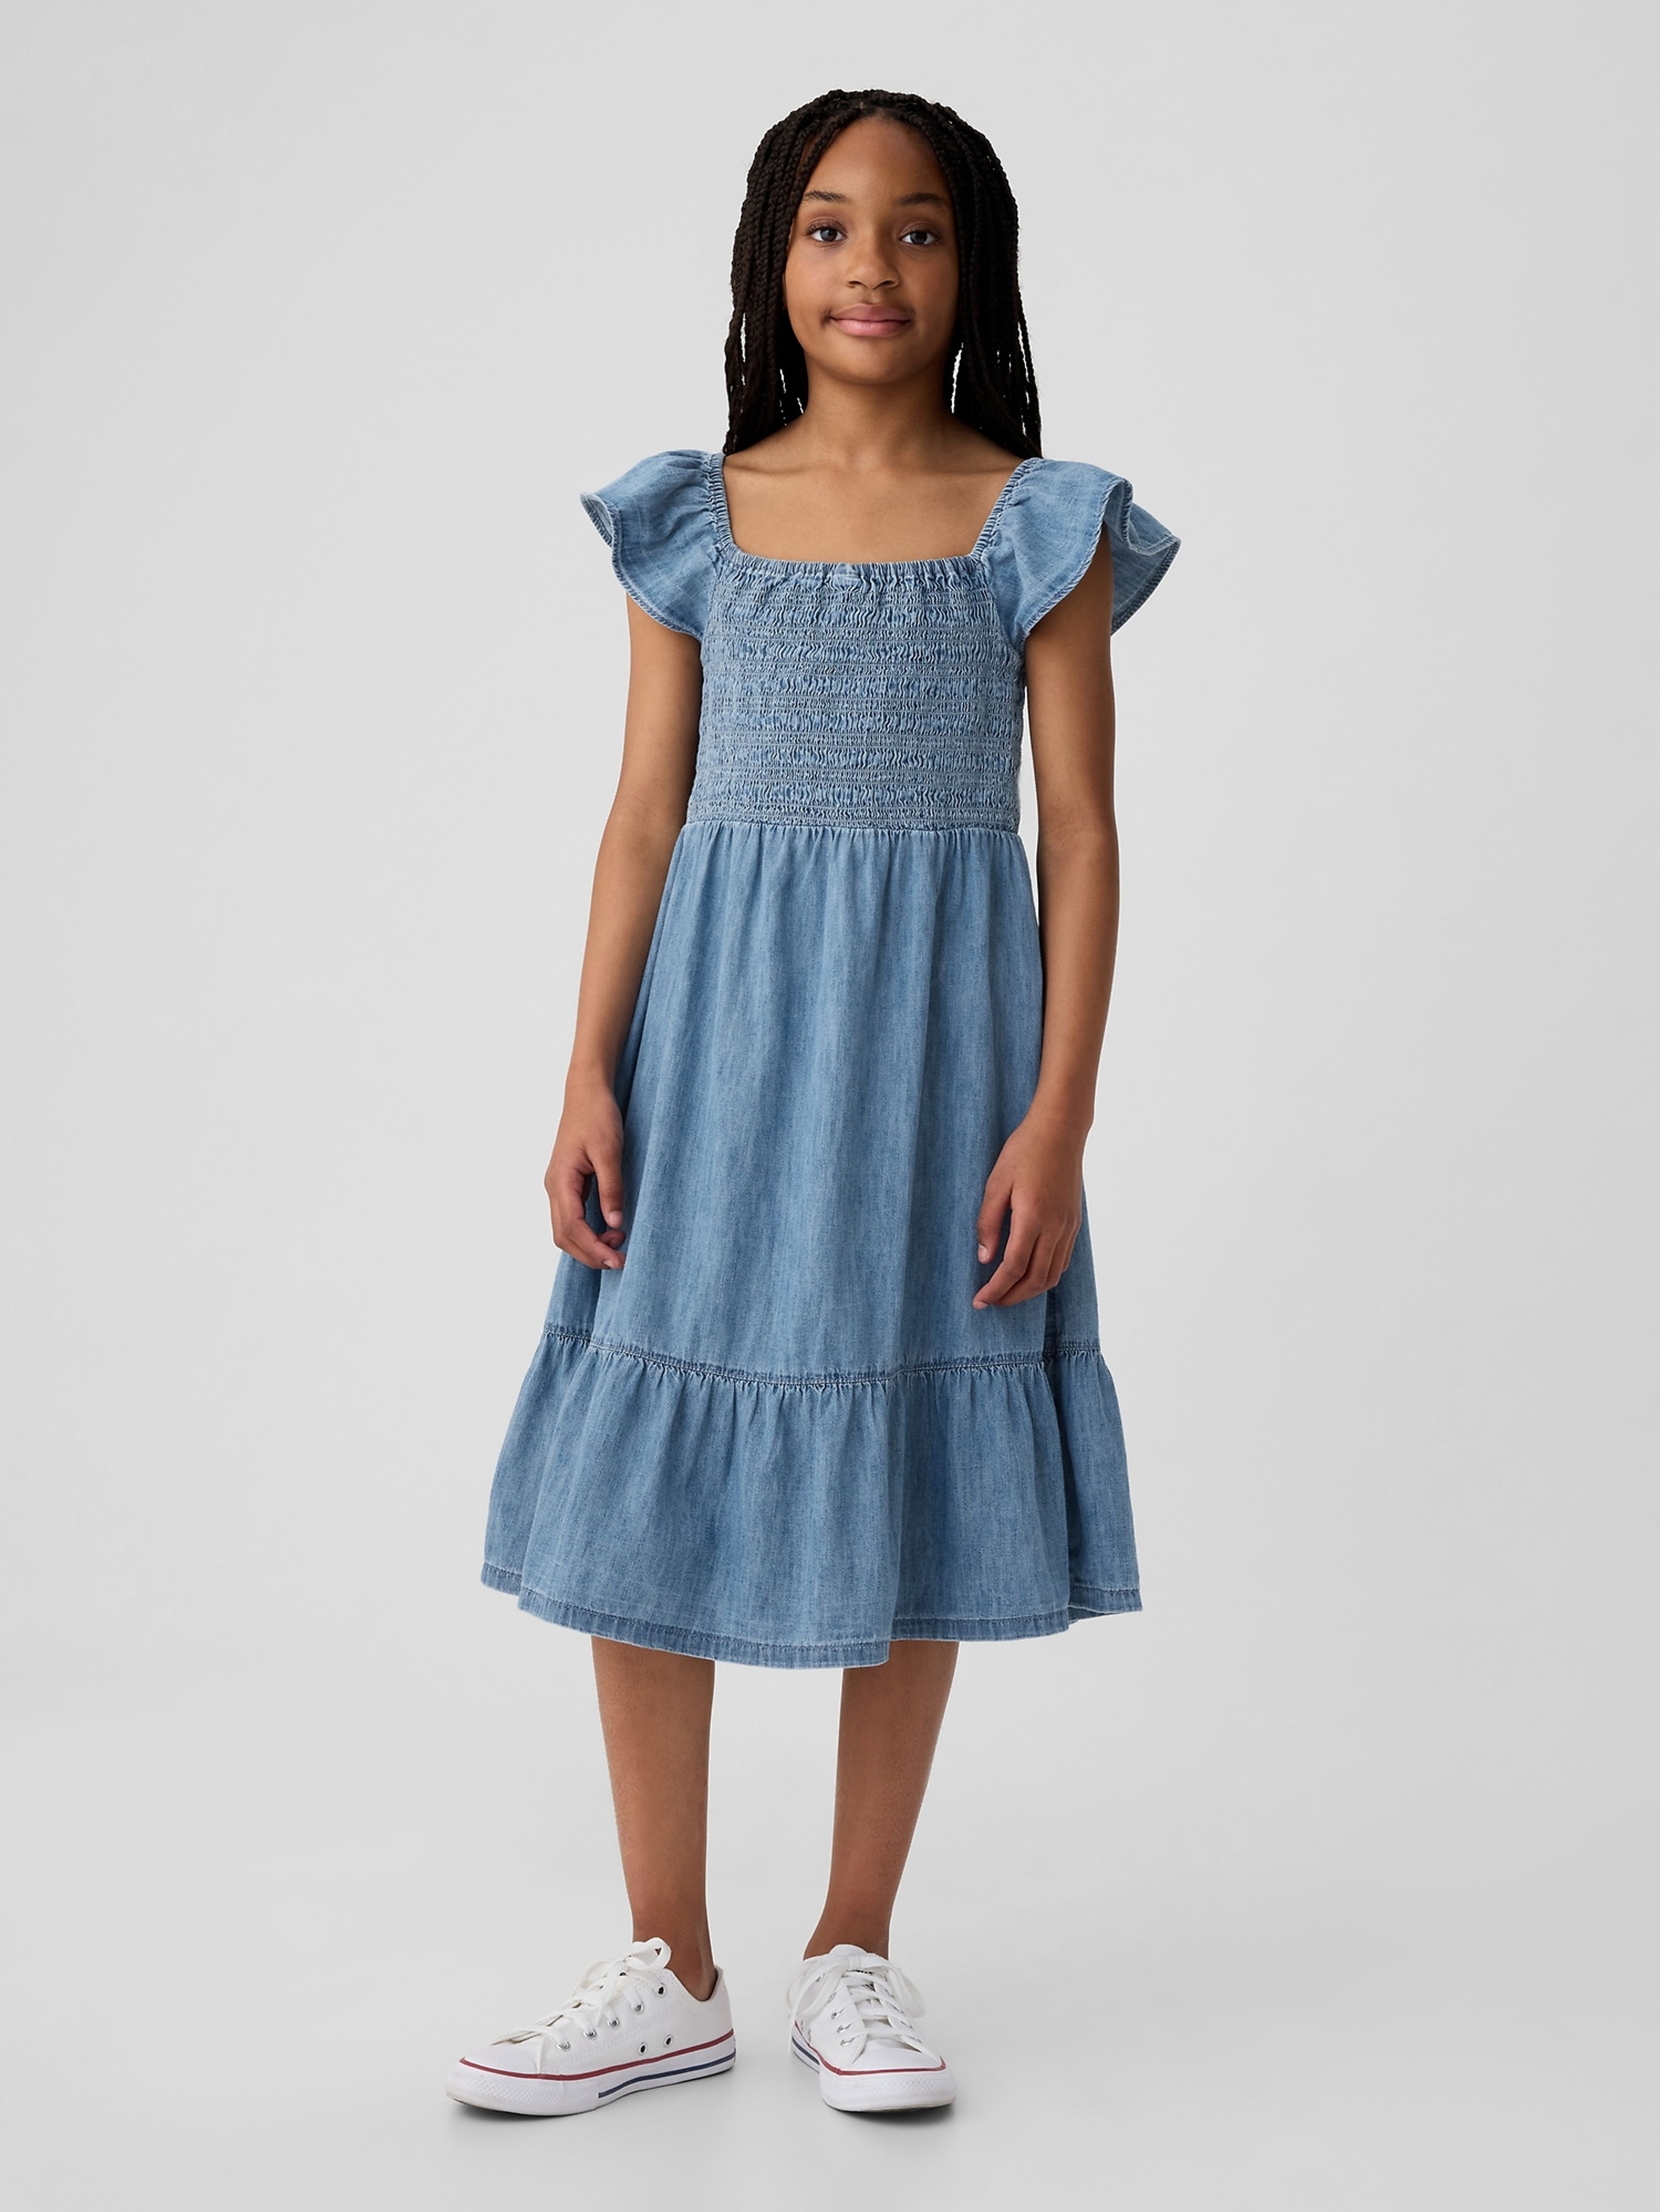 Dżinsowa sukienka midi dla dzieci